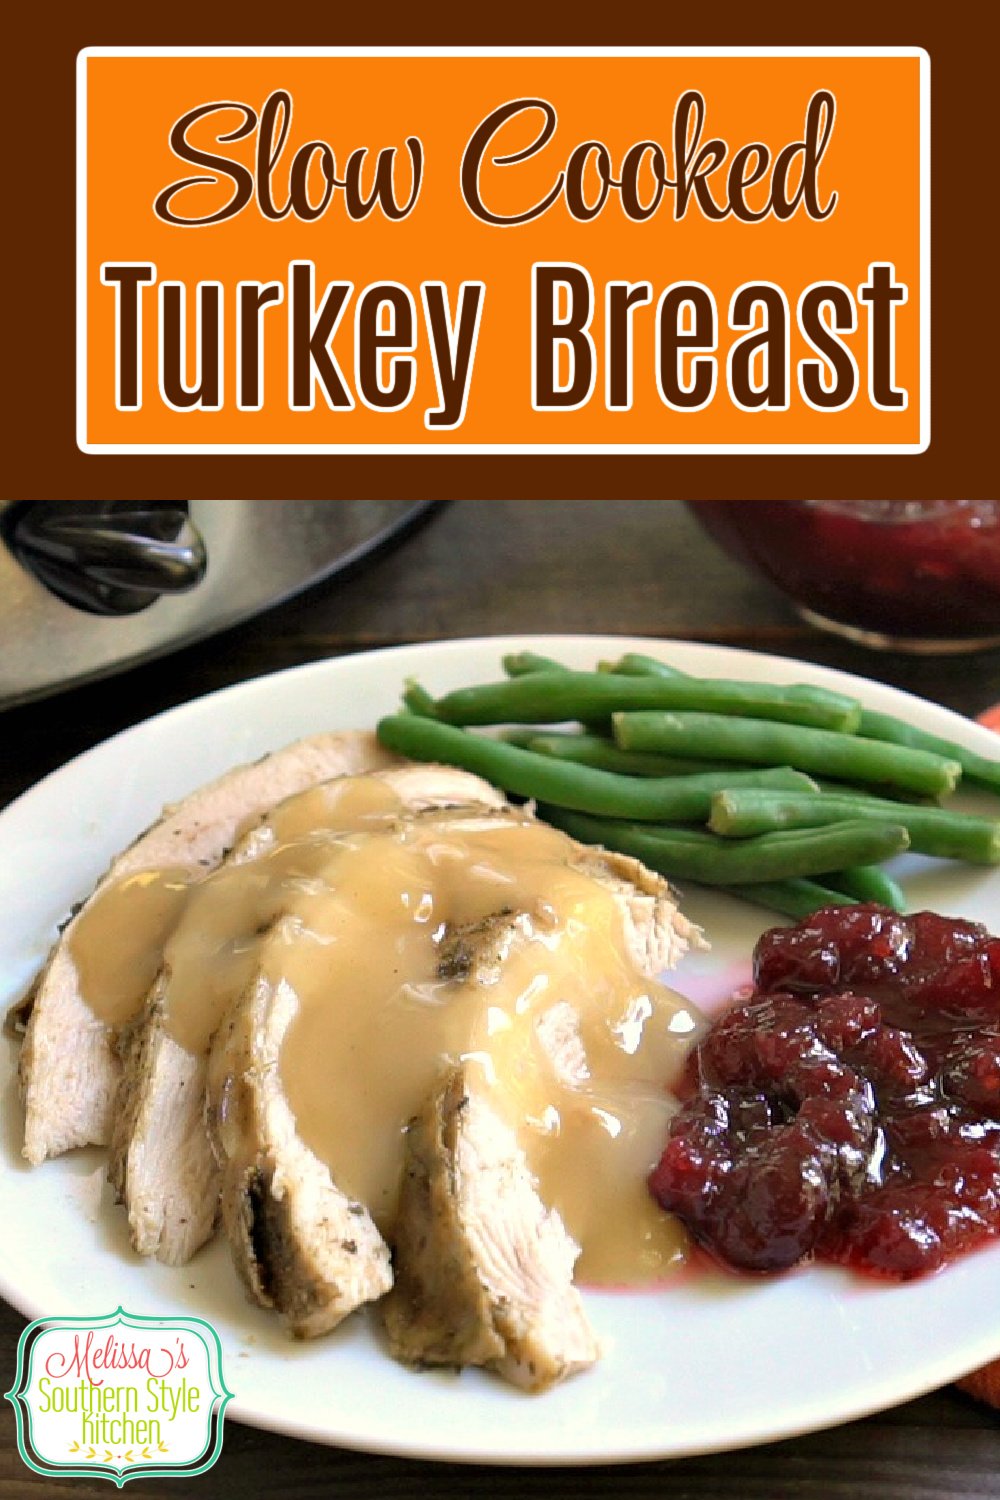 https://www.melissassouthernstylekitchen.com/wp-content/uploads/2013/10/slow-cooked-turkey-breast-pin-1.jpg